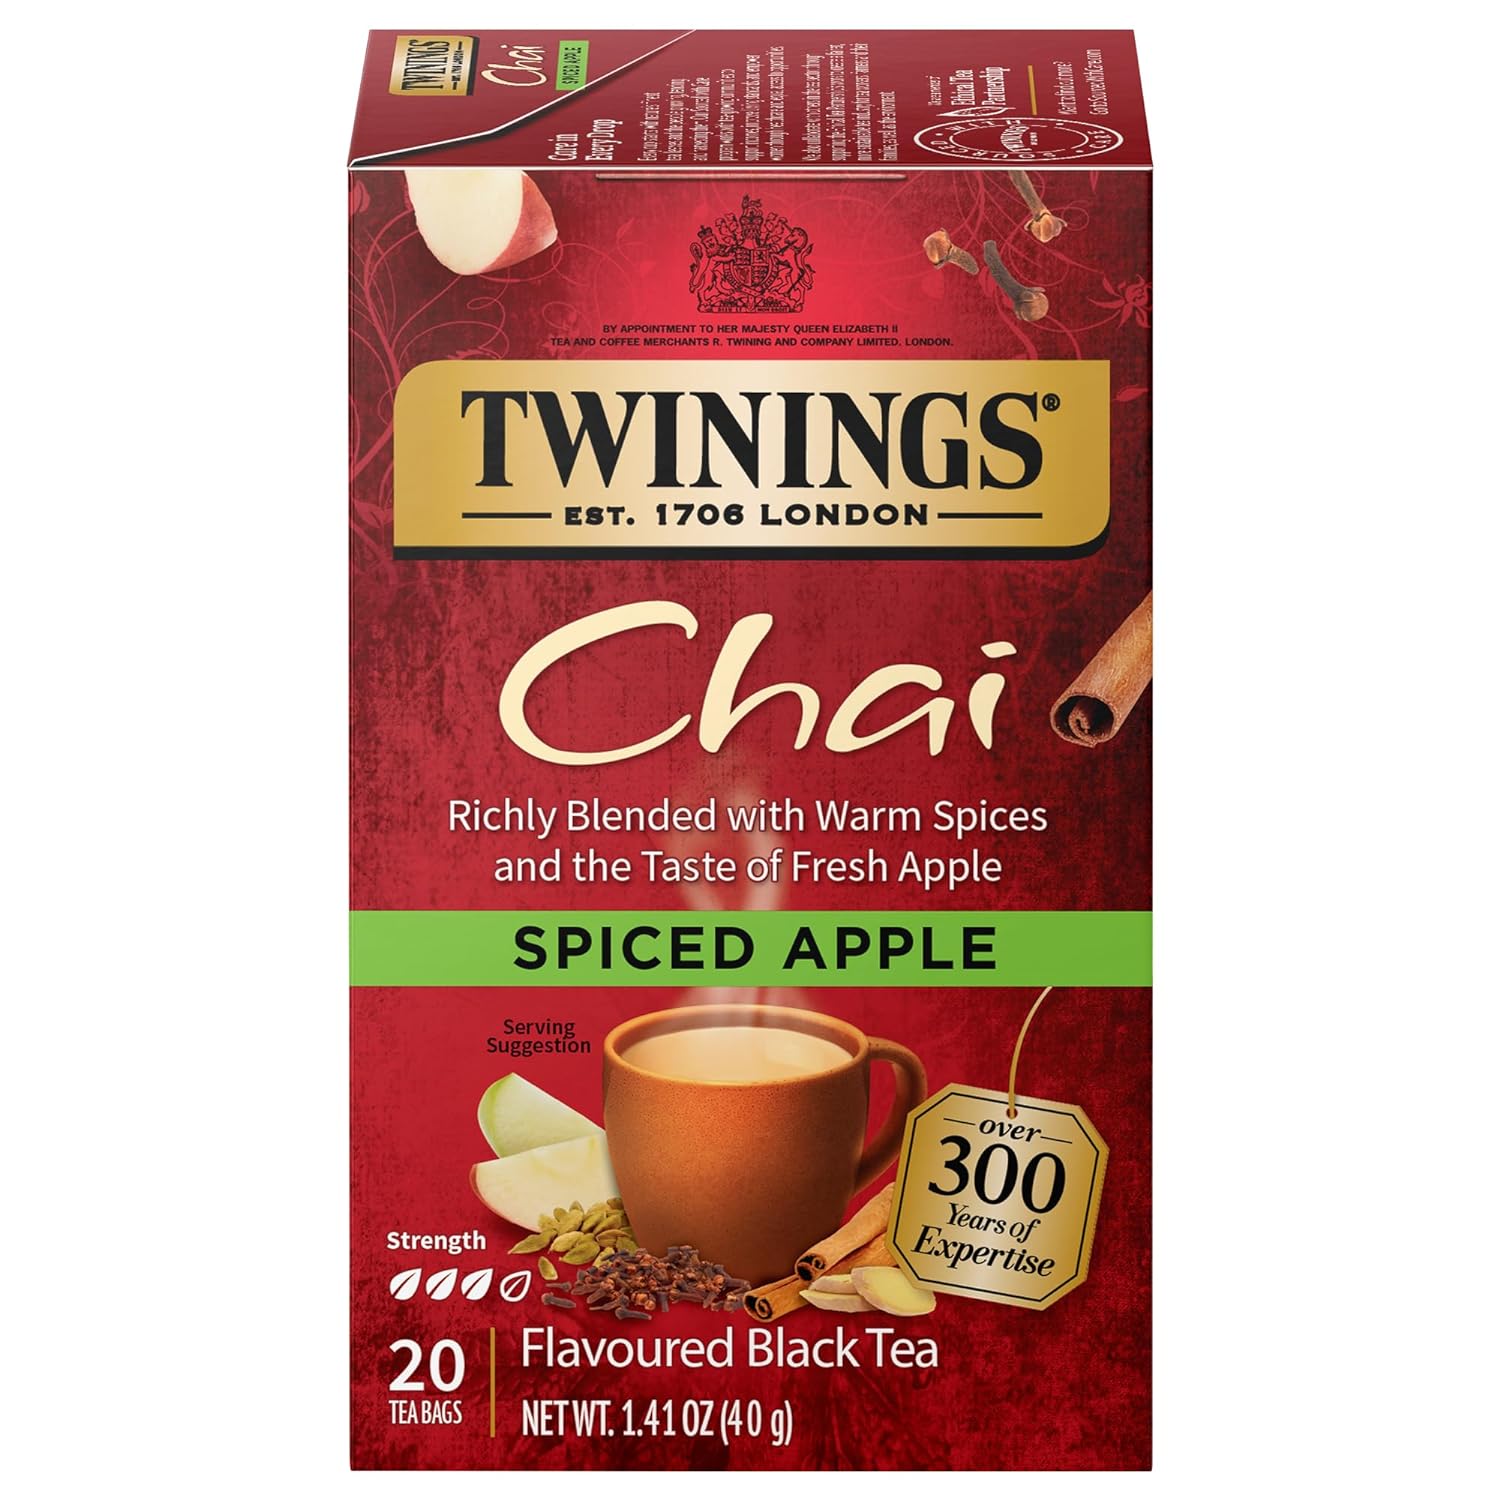 Twinings French Vanilla Chai Black Tea Review